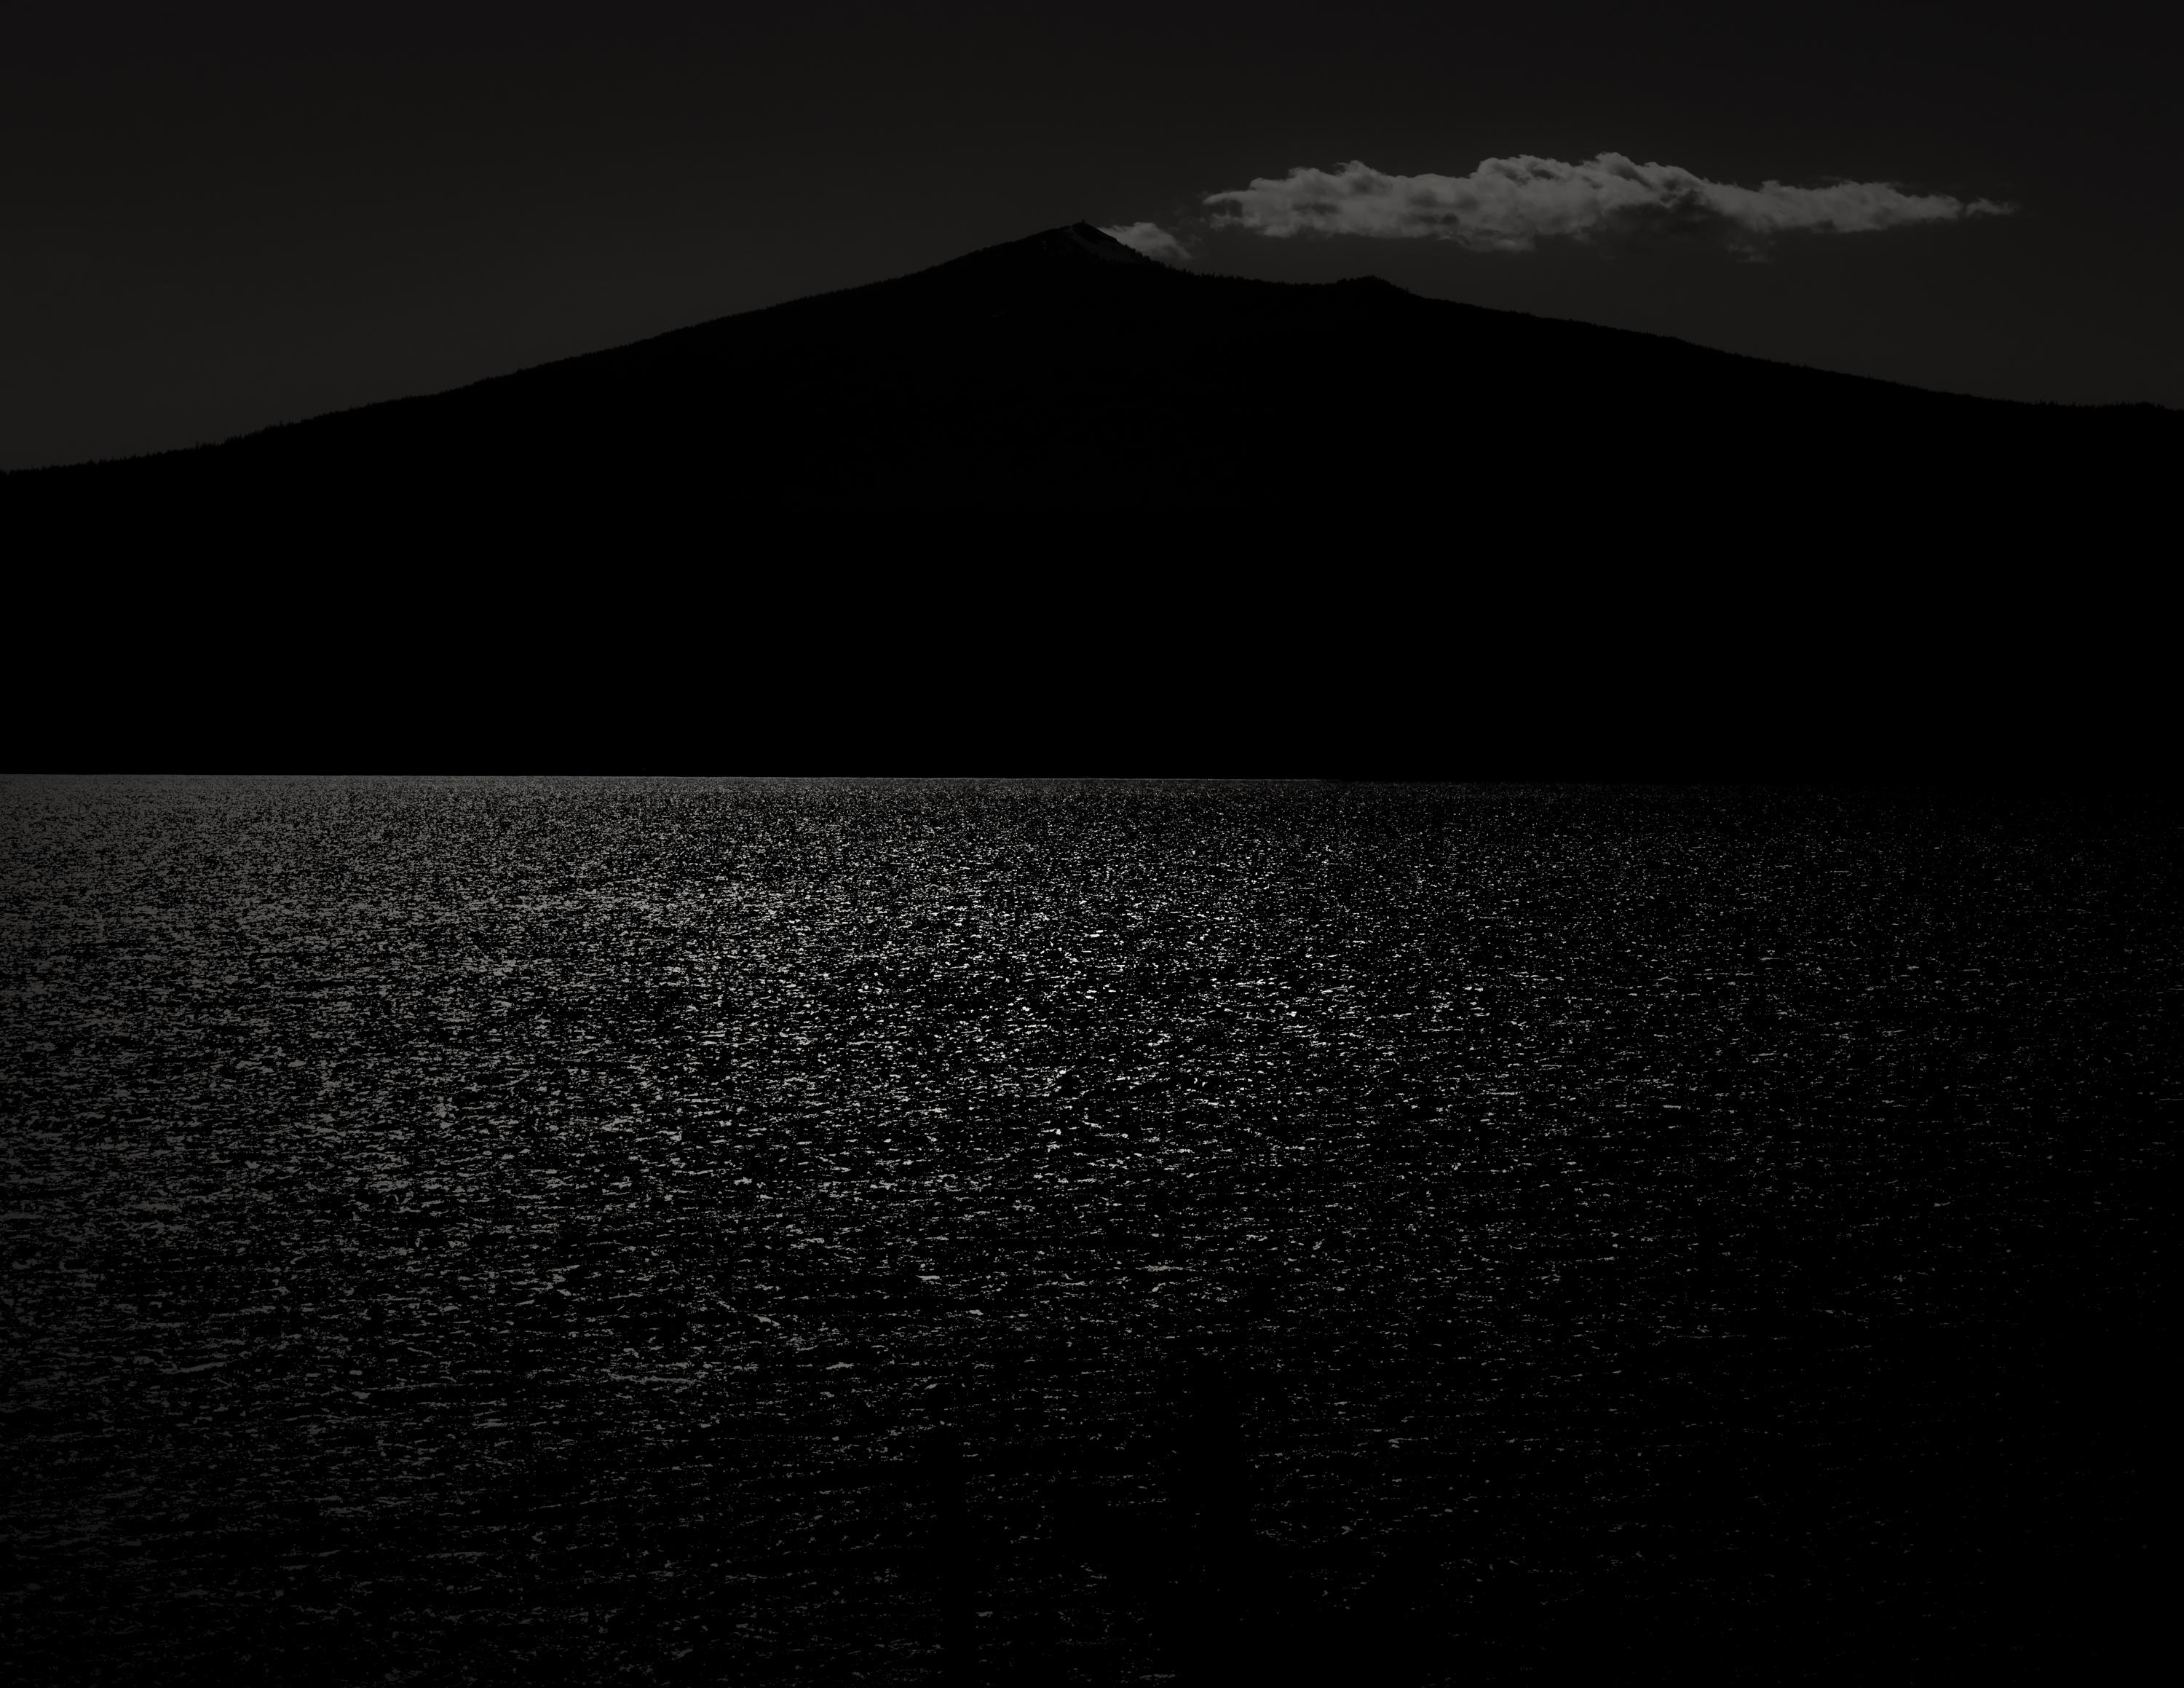 Jeffrey Conley Black and White Photograph - Moonlit Water, Peak, and Cloud, Oregon, 2019